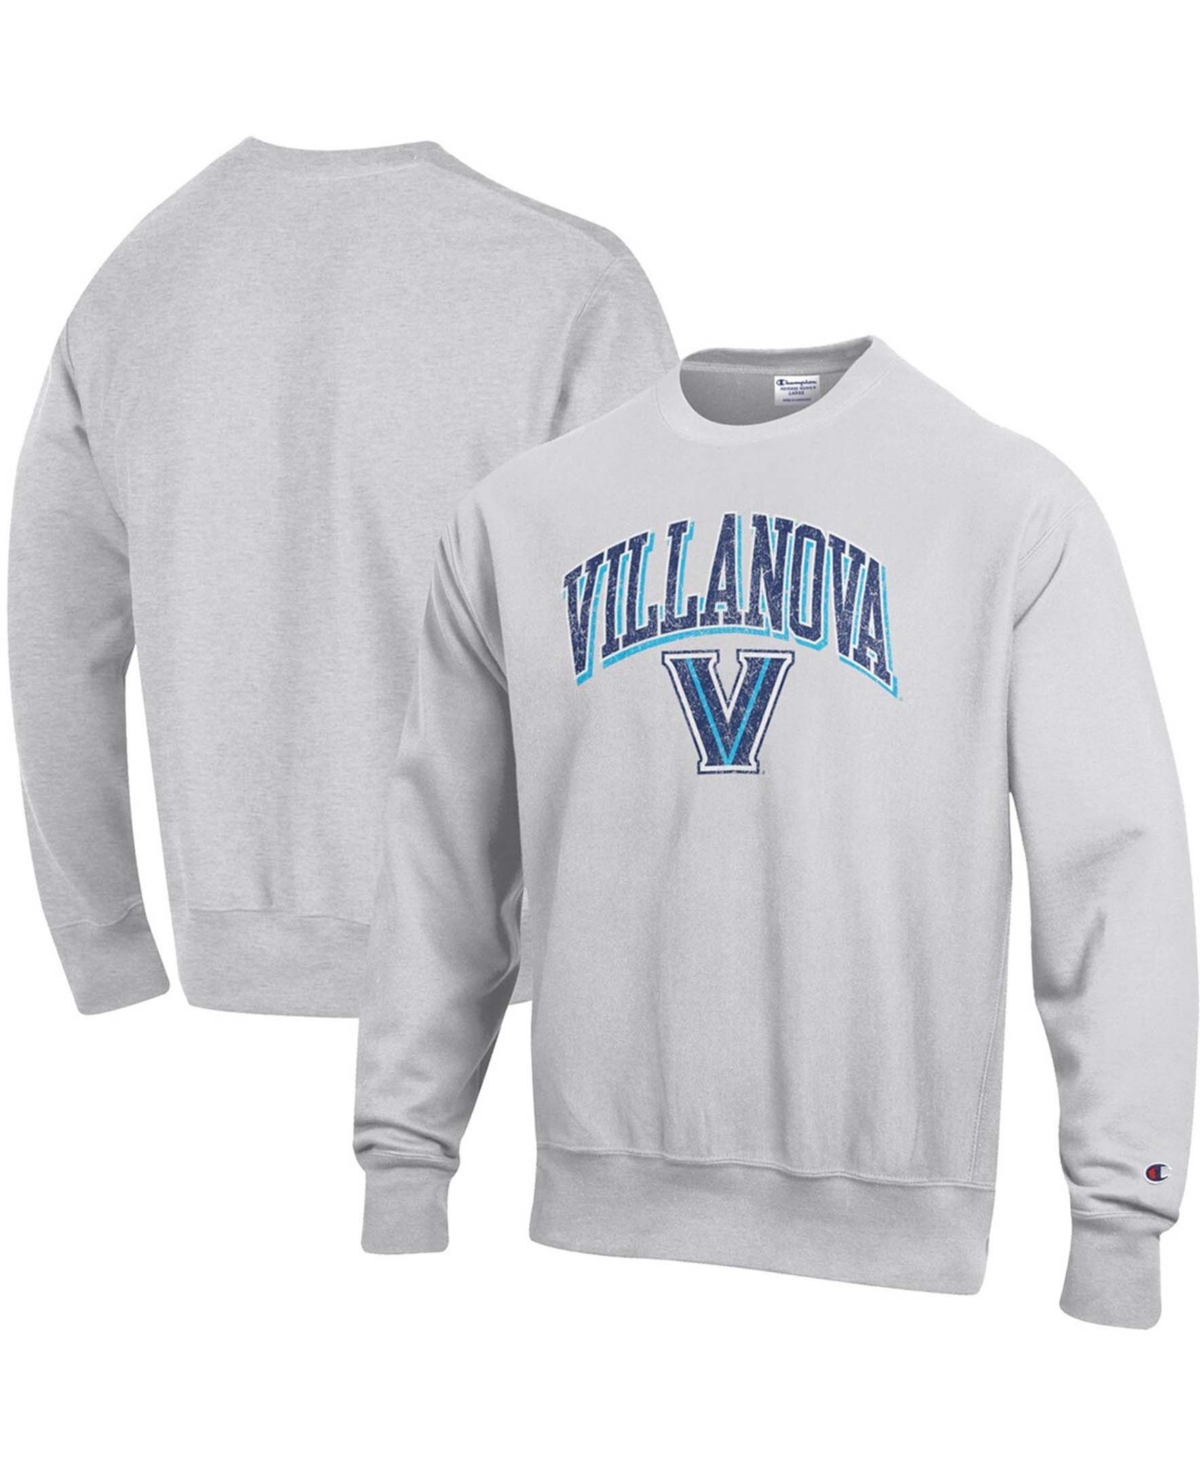 Shop Champion Men's Gray Villanova Wildcats Arch Over Logo Reverse Weave Pullover Sweatshirt